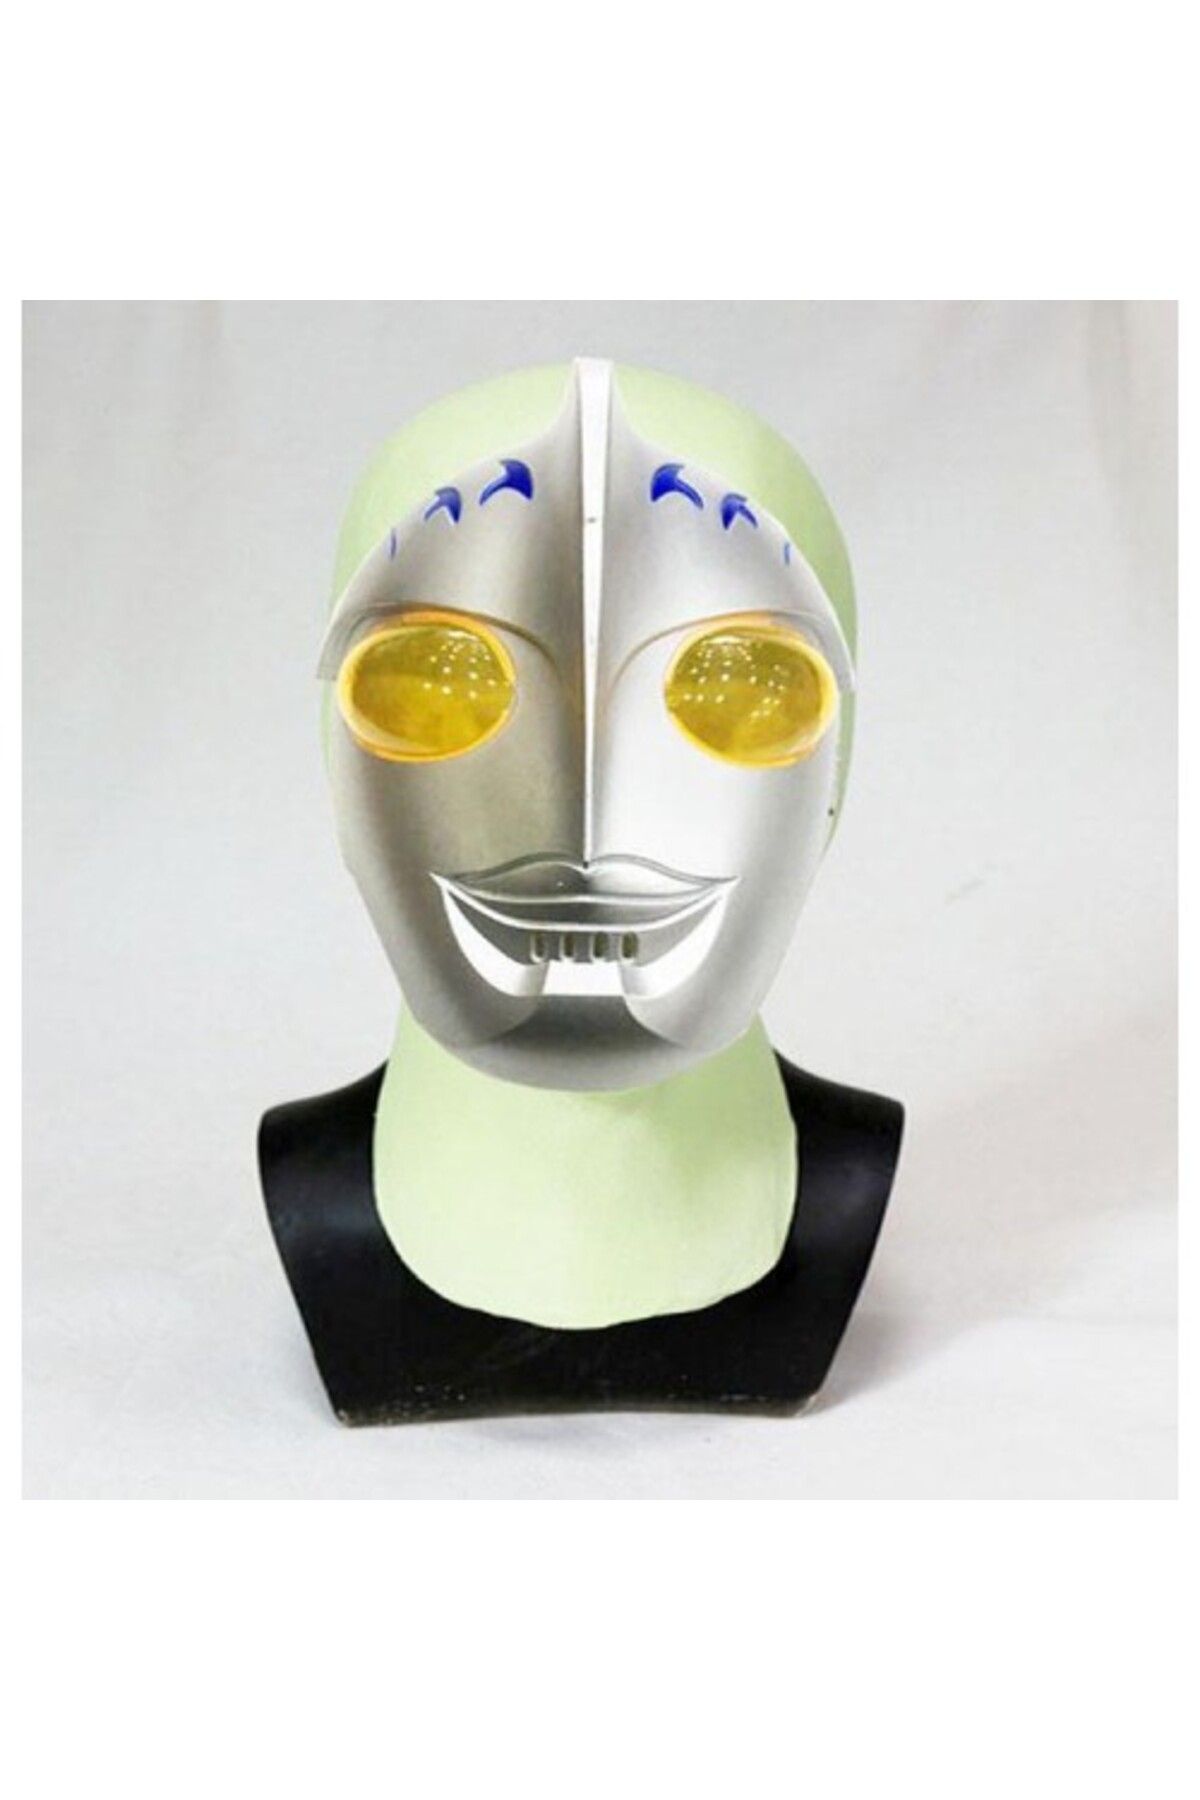 Ali The Stereo Plastik Uzaylı Robot Maskesi alithestereo